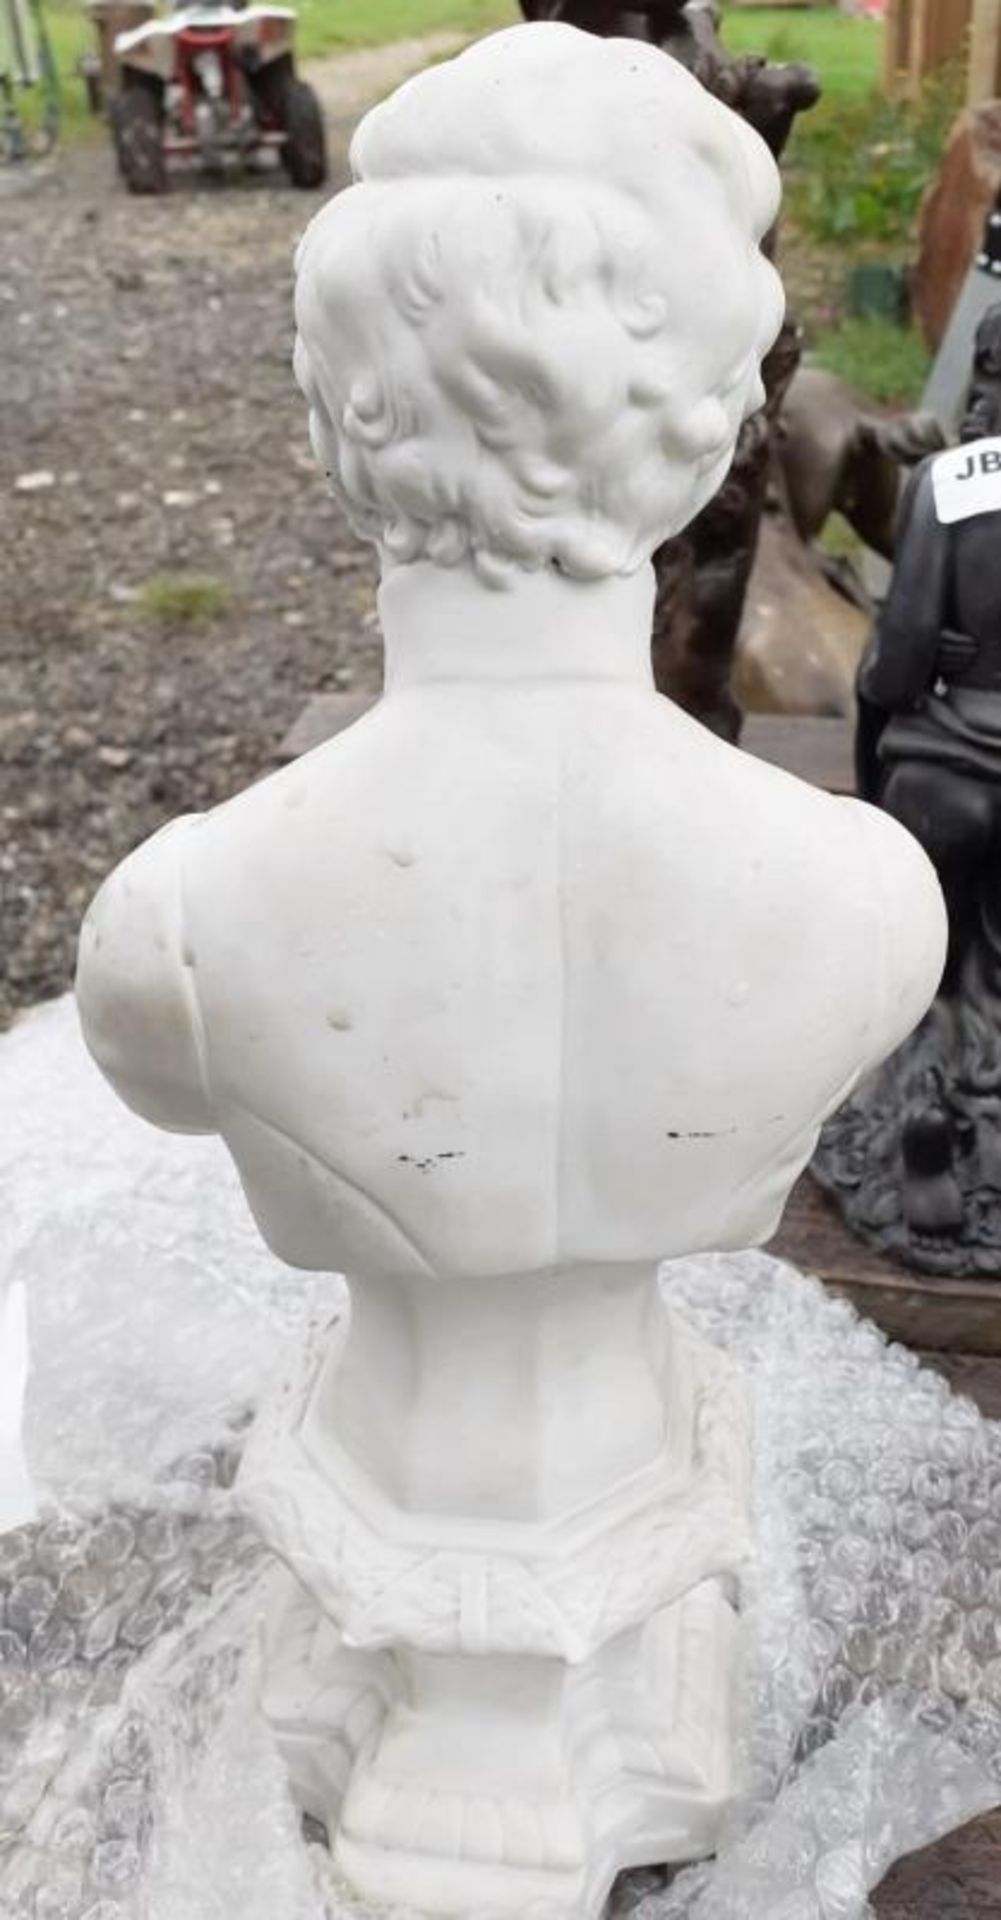 1 x Porcelain Cast Bust / Sculpture - Dimensions: Height 35cm x Base 11x 11cm - Ref: JB215 - Pre-Own - Image 4 of 7